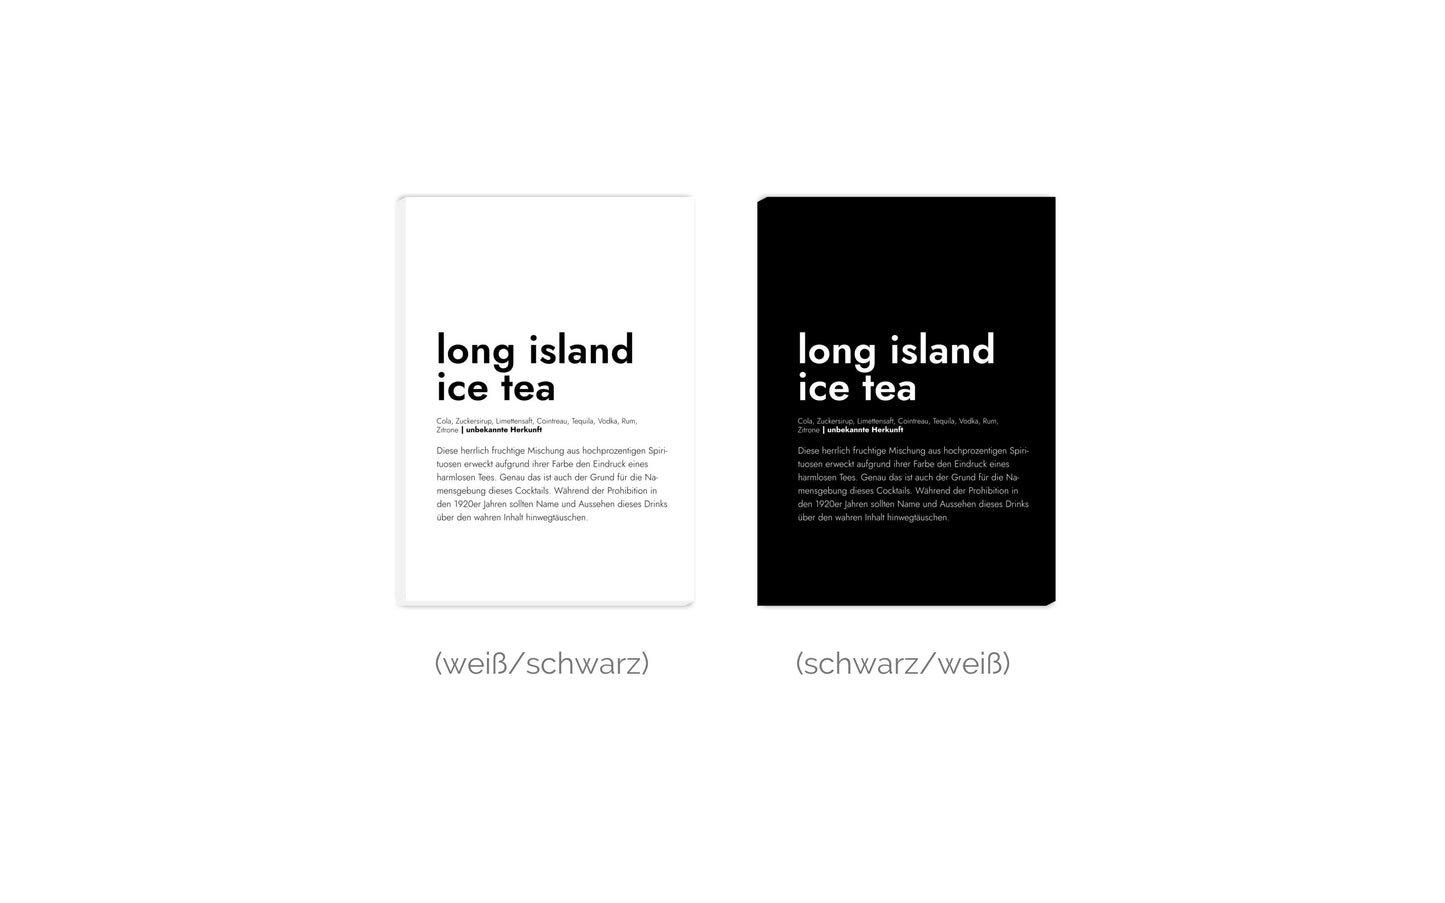 Leinwand Long Island Ice Tea - Definition